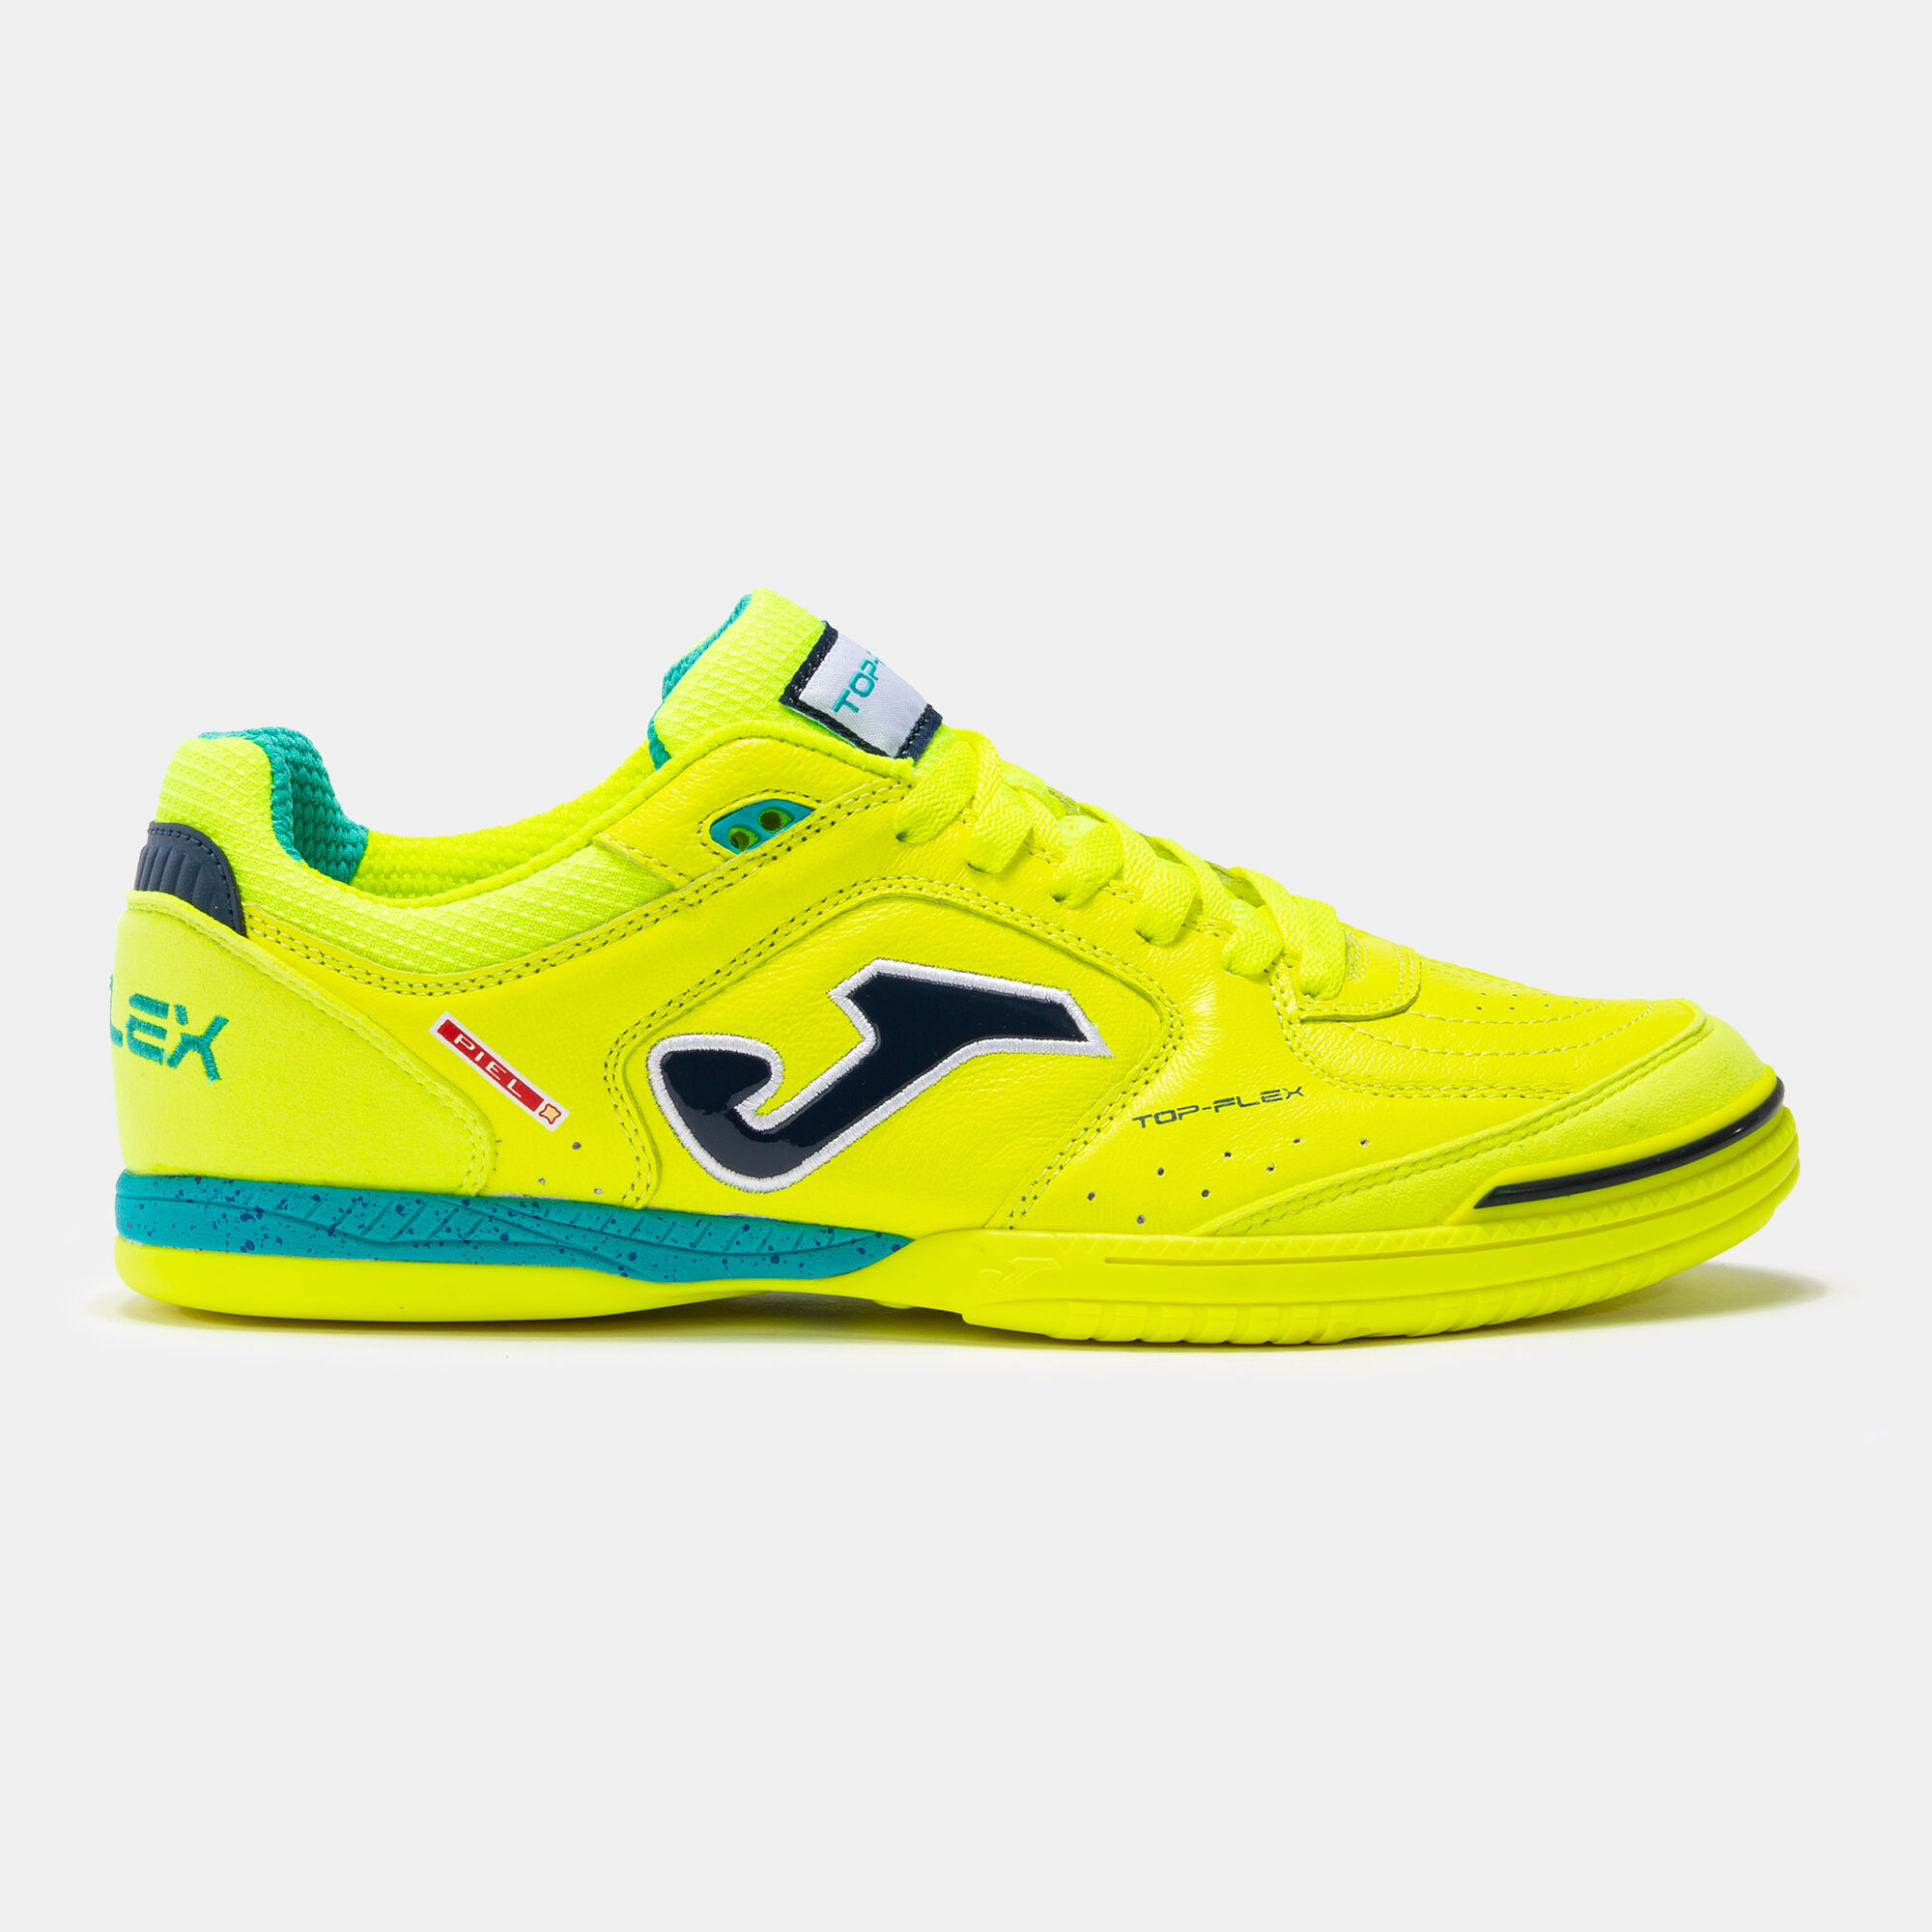 Cerdo Cena escarcha Futsal shoes Top Flex 23 indoor fluorescent yellow navy blue | JOMA®